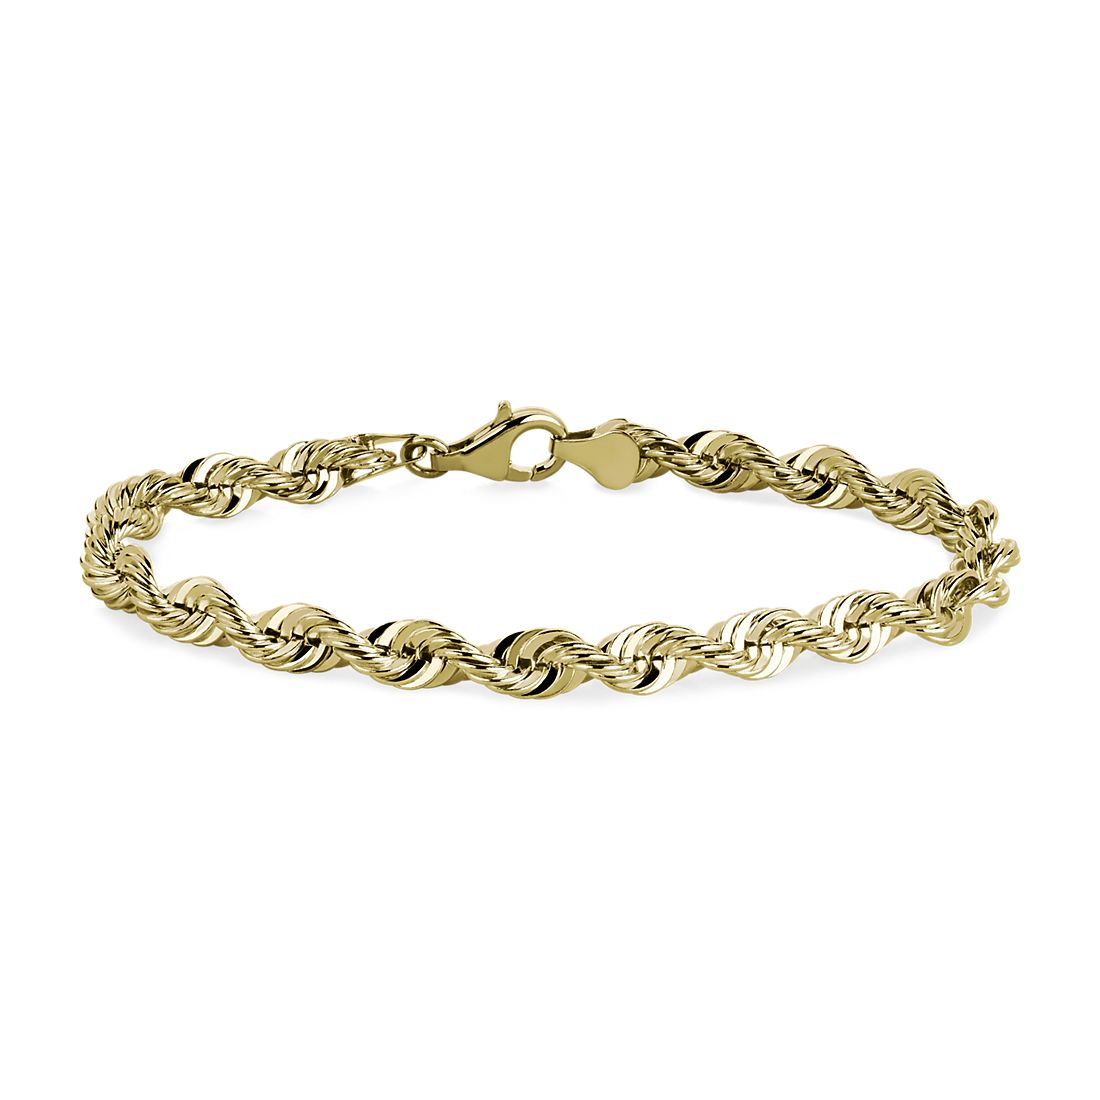 8" Men's Rope Chain Bracelet in 14k Yellow Gold (6 mm)